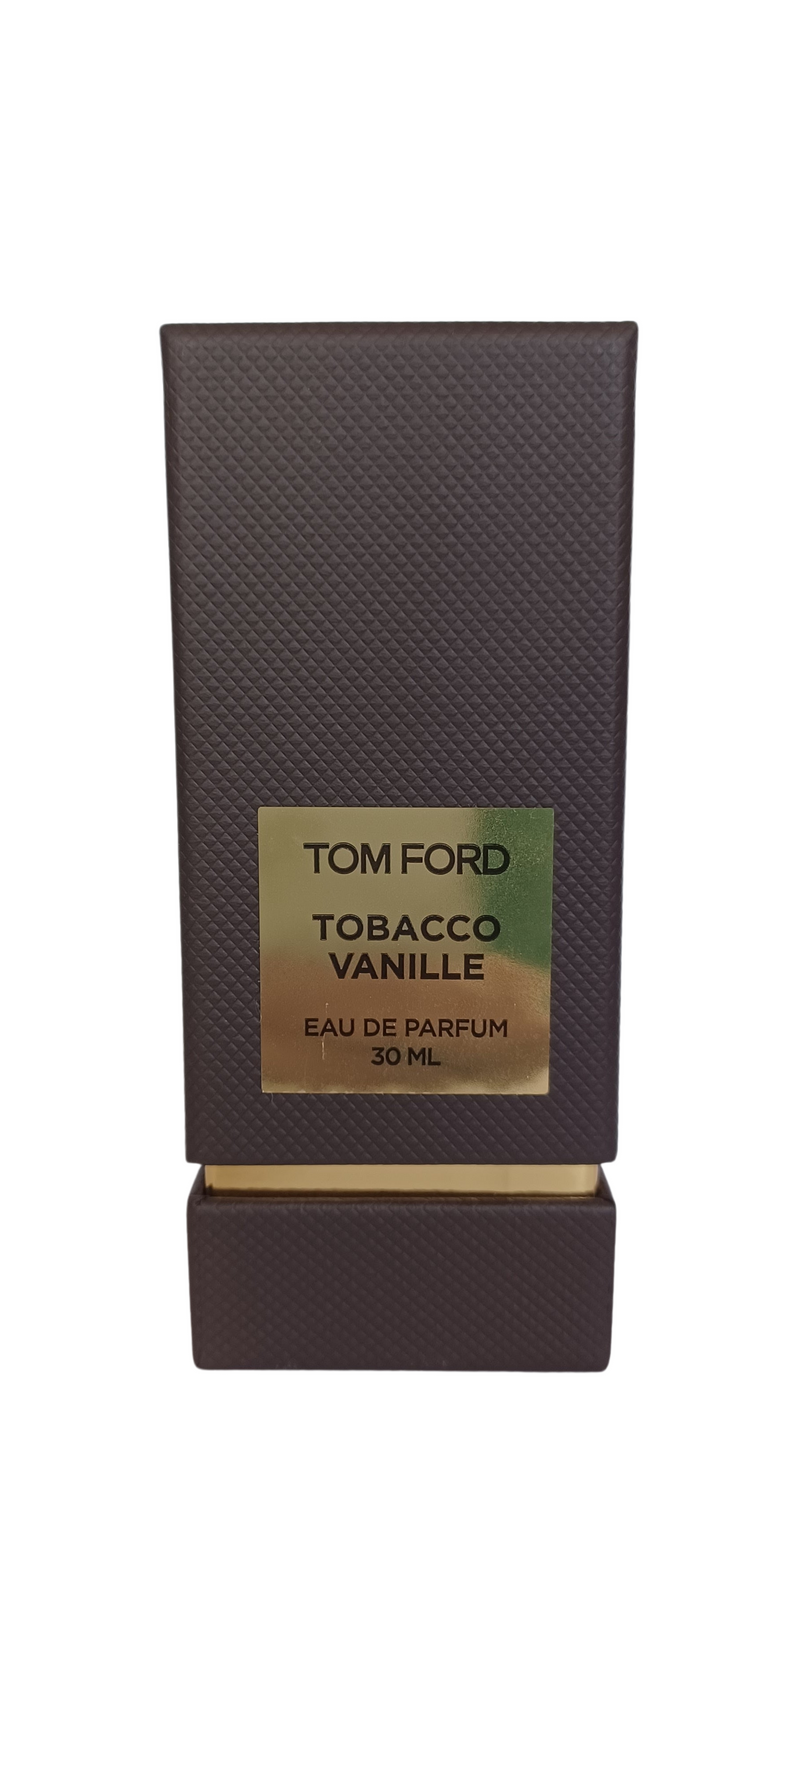 Tobacco Vanille - Tom Ford - Eau de parfum - 30/30ml